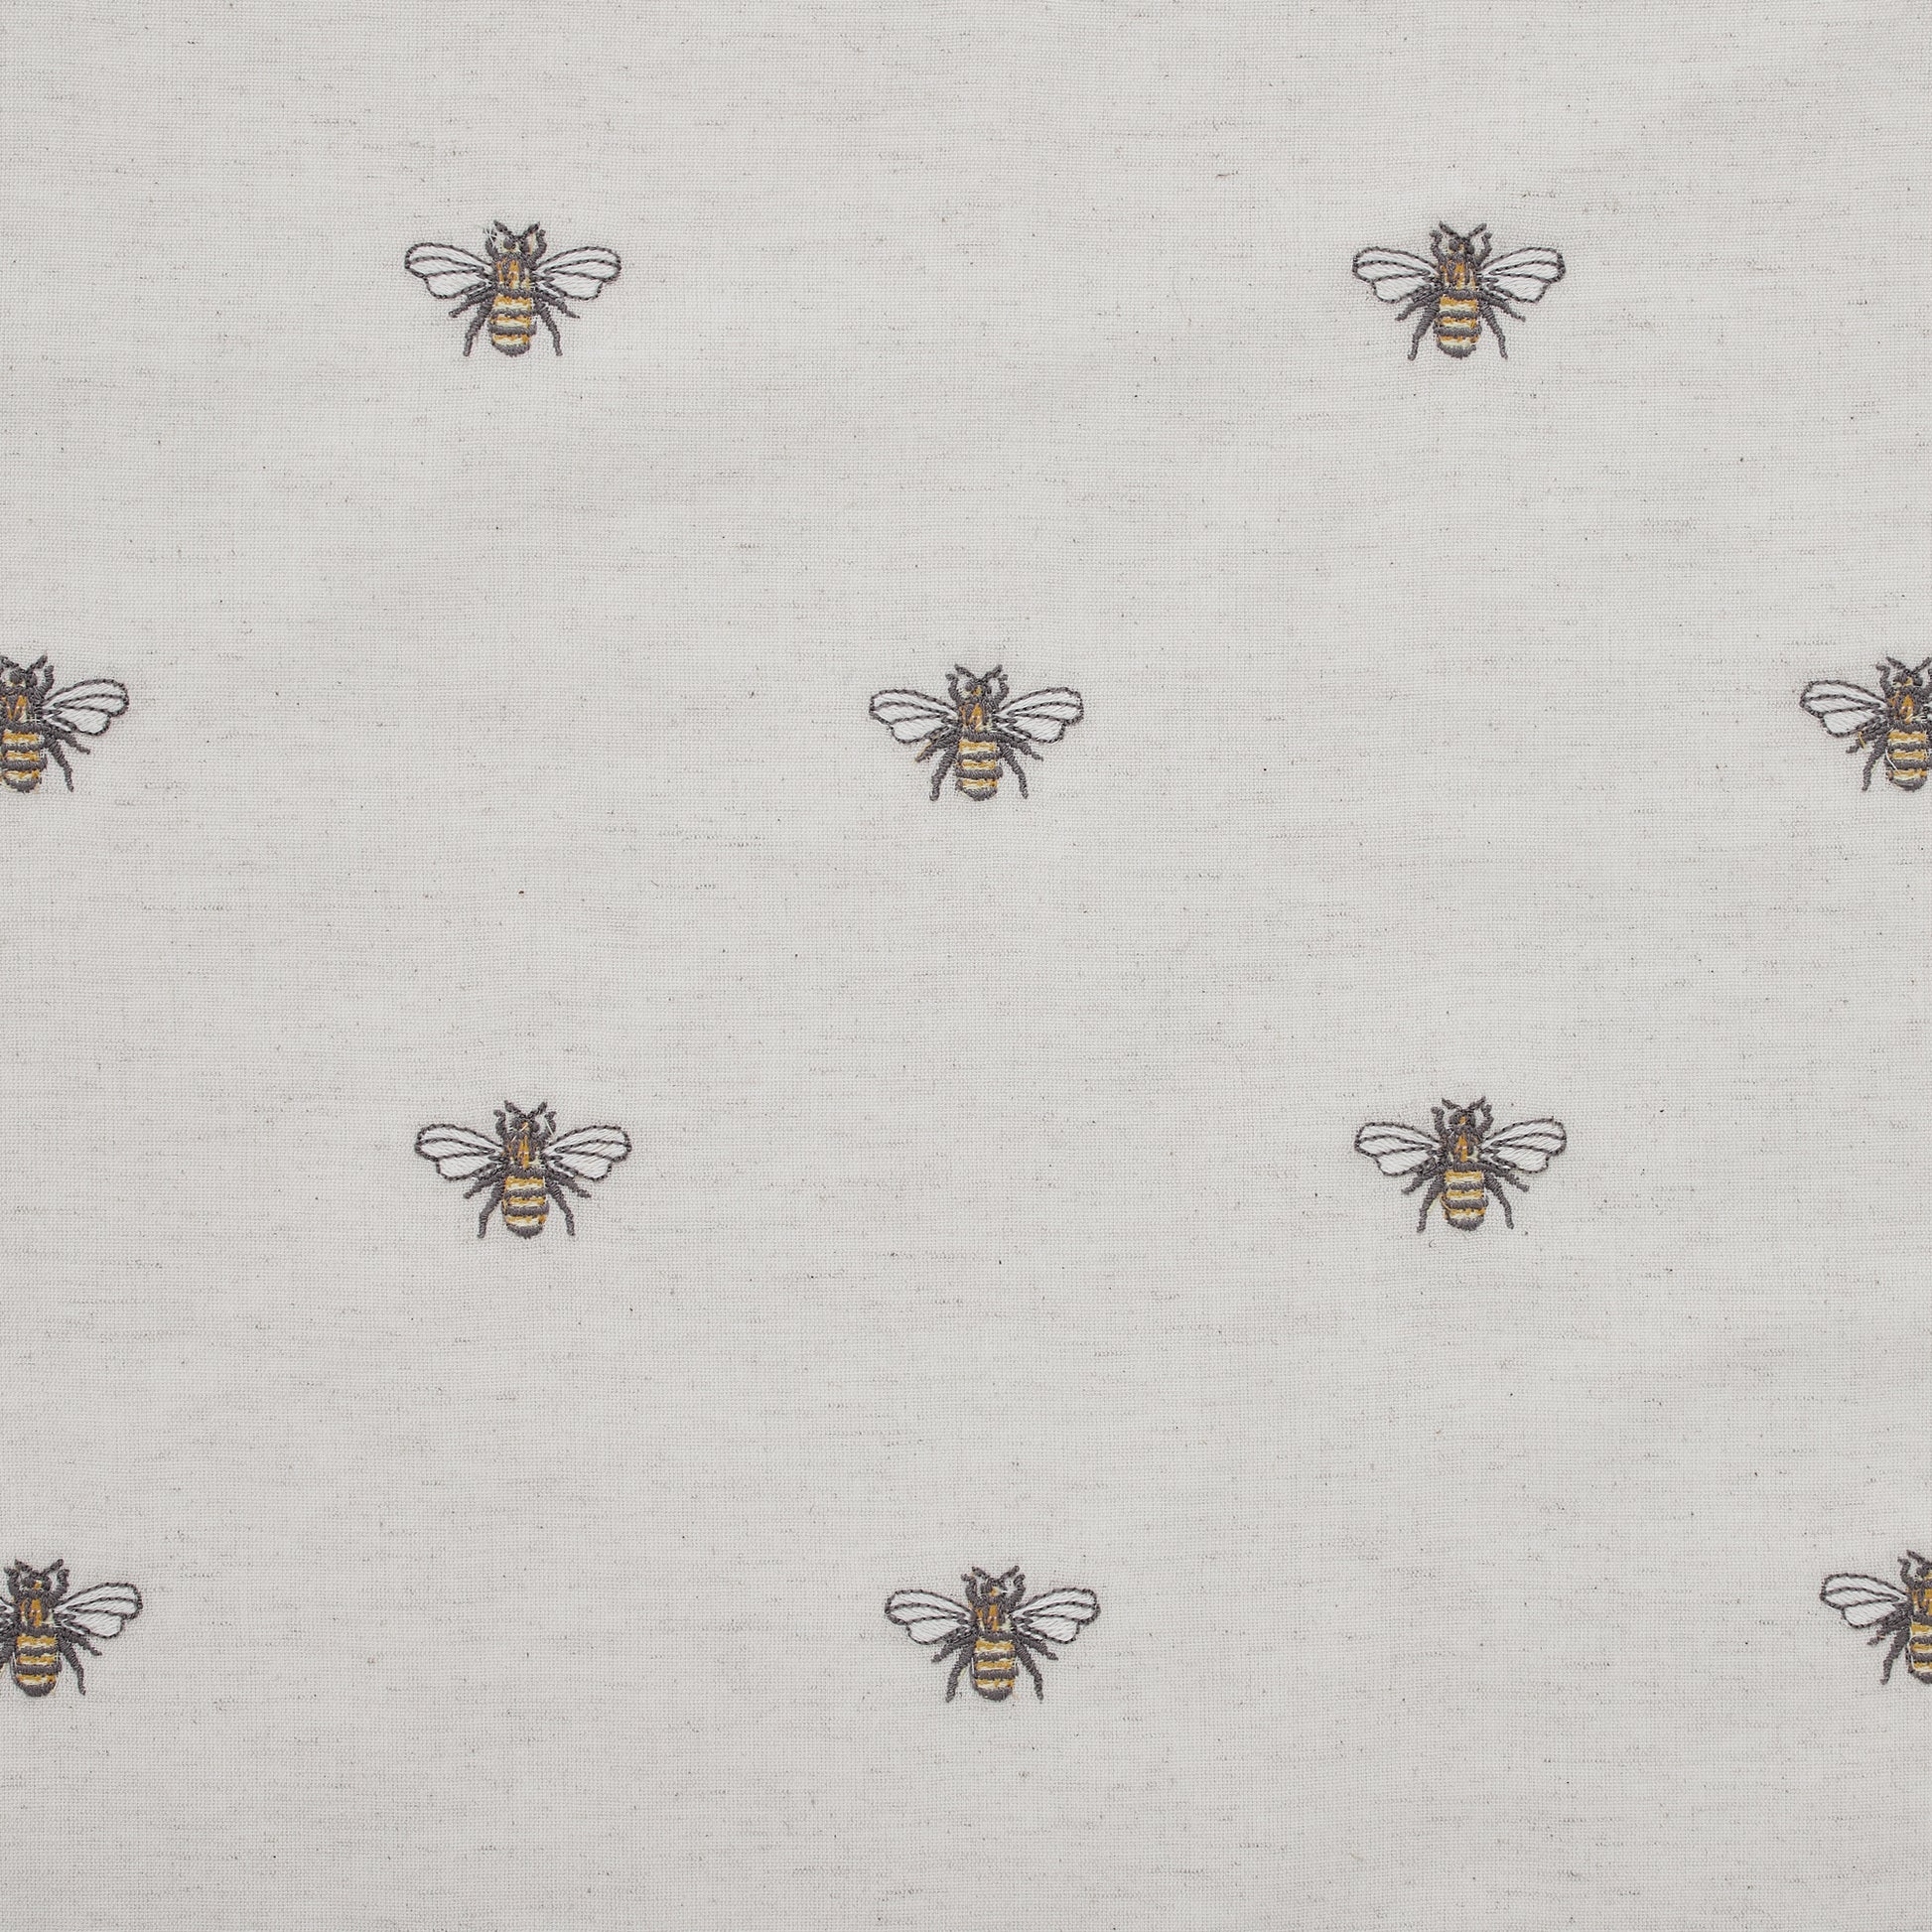 Embroidered Bee Tea Towel Set of 4 19x28